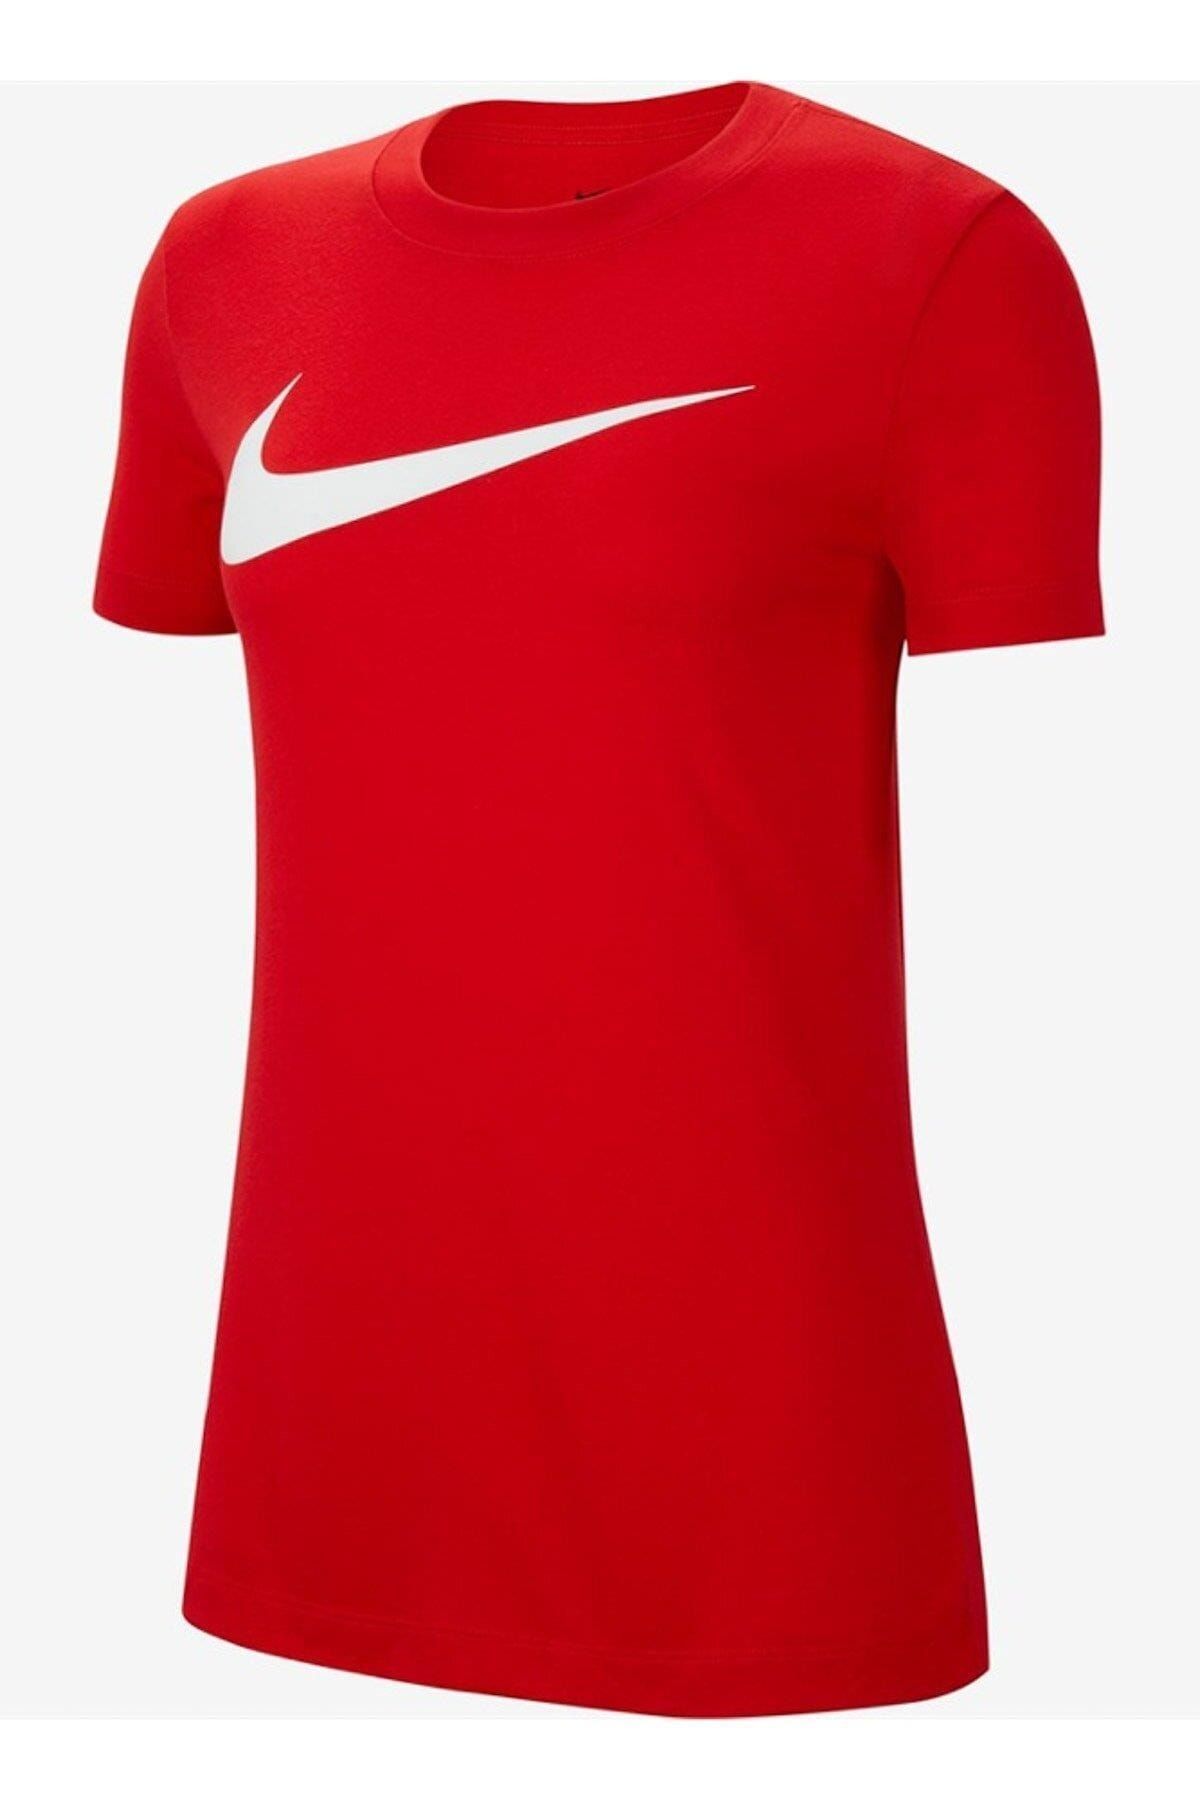 Nike Cw6967-657 Dri-fit Park Kadın T-shirt